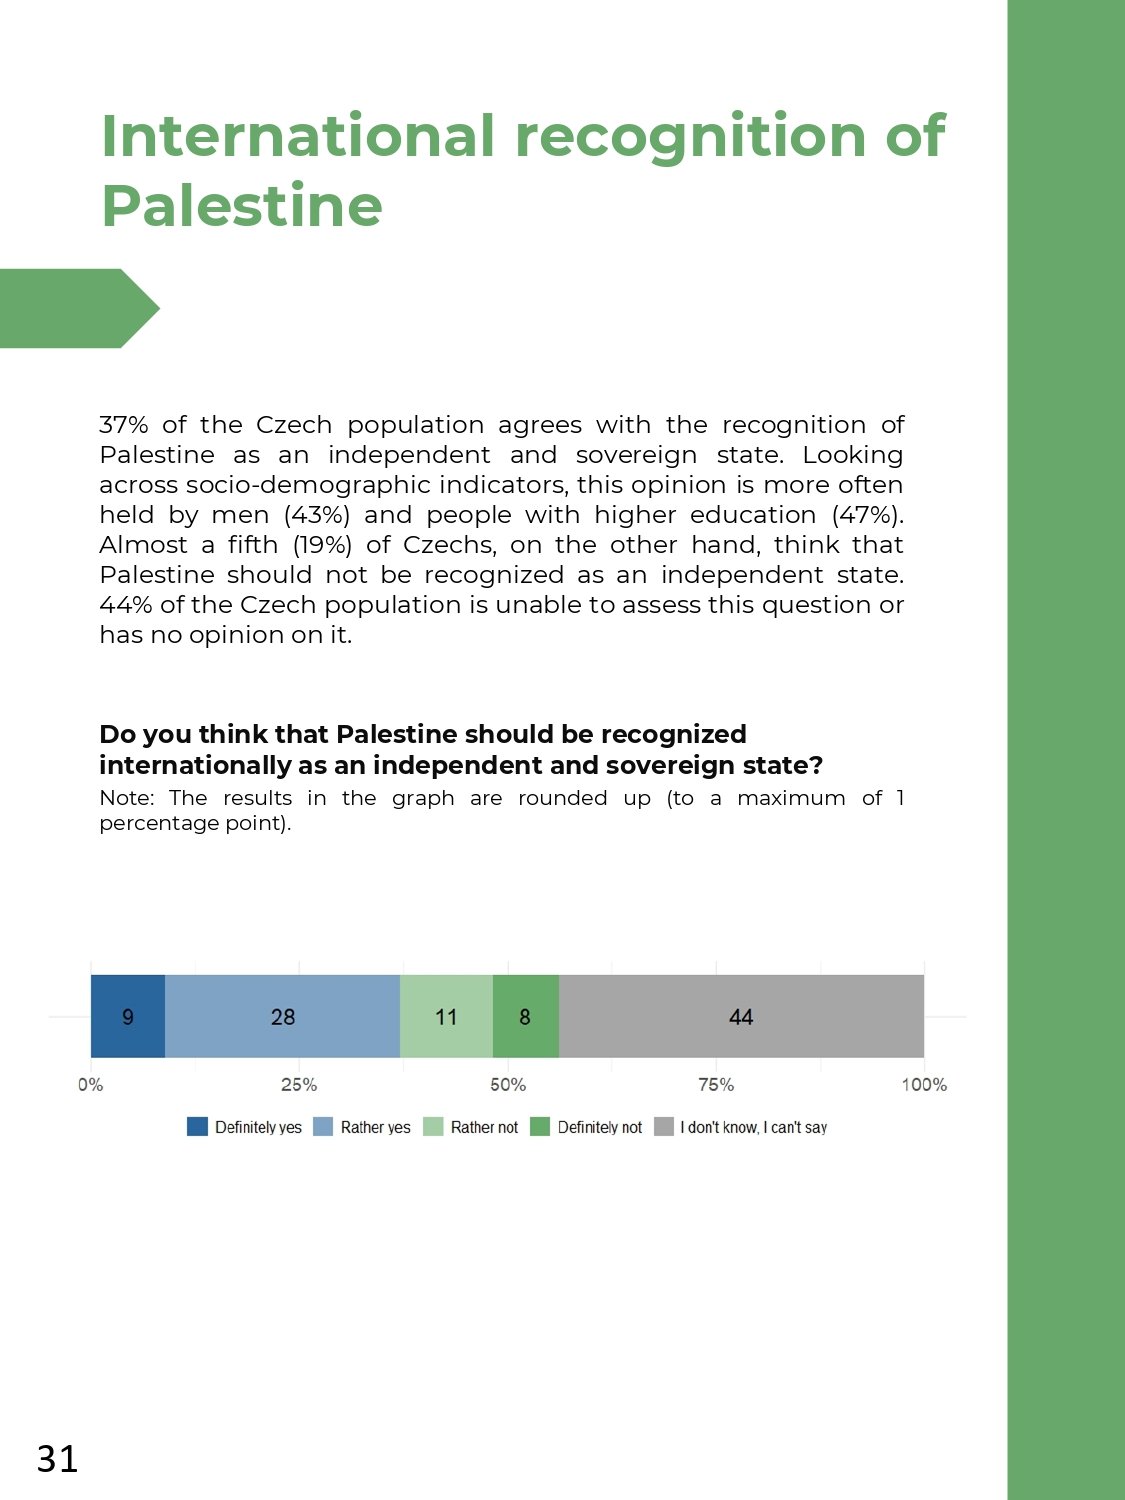 HCIS_PRCP_Public attitudes towards Israel_REPORT_CZ_Finální (2)_pages-to-jpg-0031.jpg